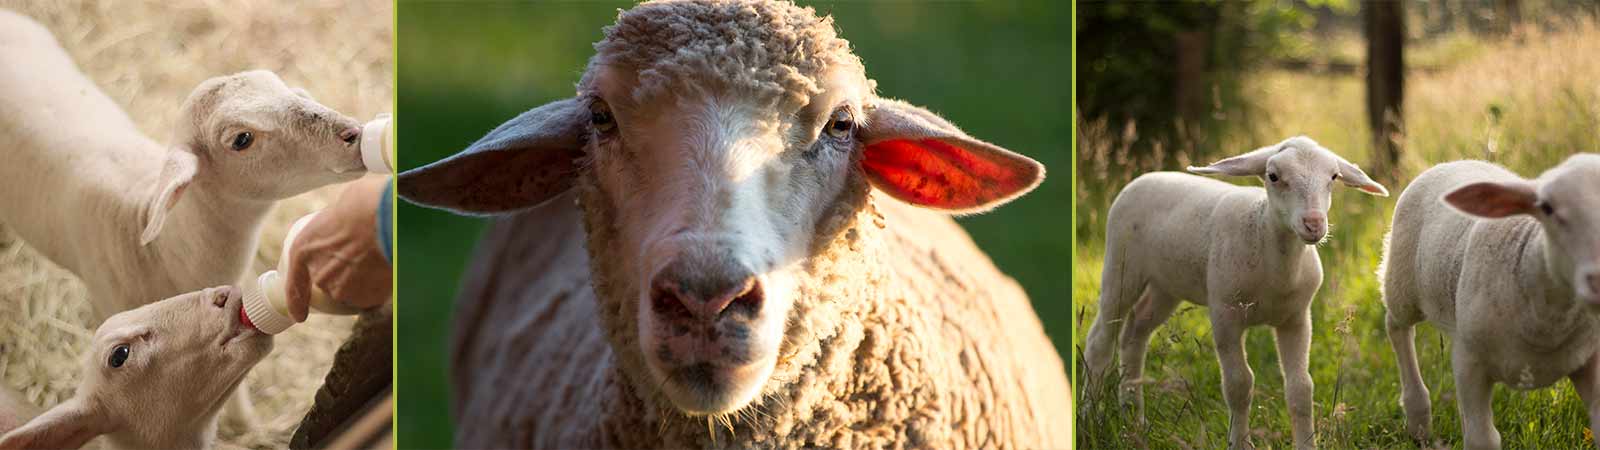 Tierarzt Behandlung Schafe